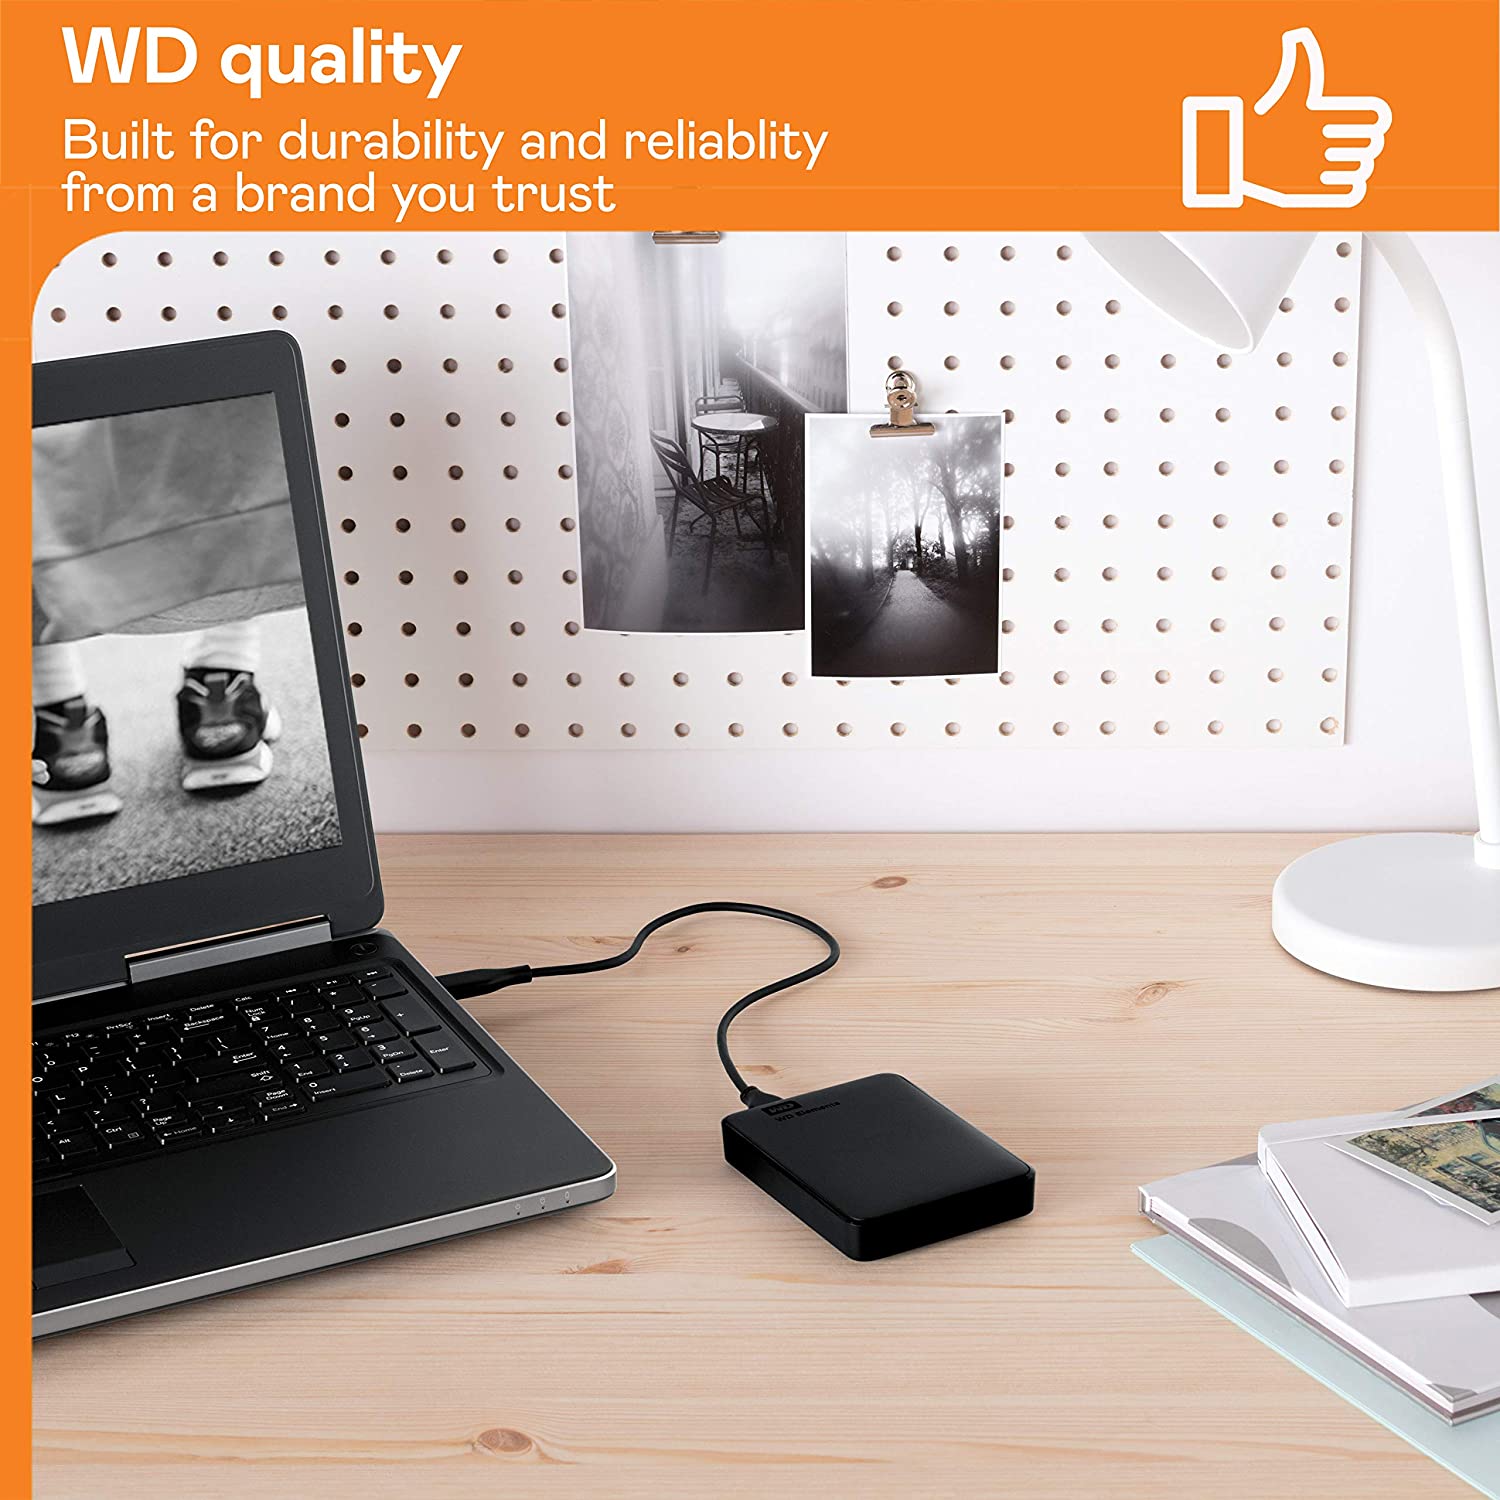 WD 5TB Elements Portable External Hard Drive, USB 3.0 - WDBU6Y0050BBK-WESN,Black